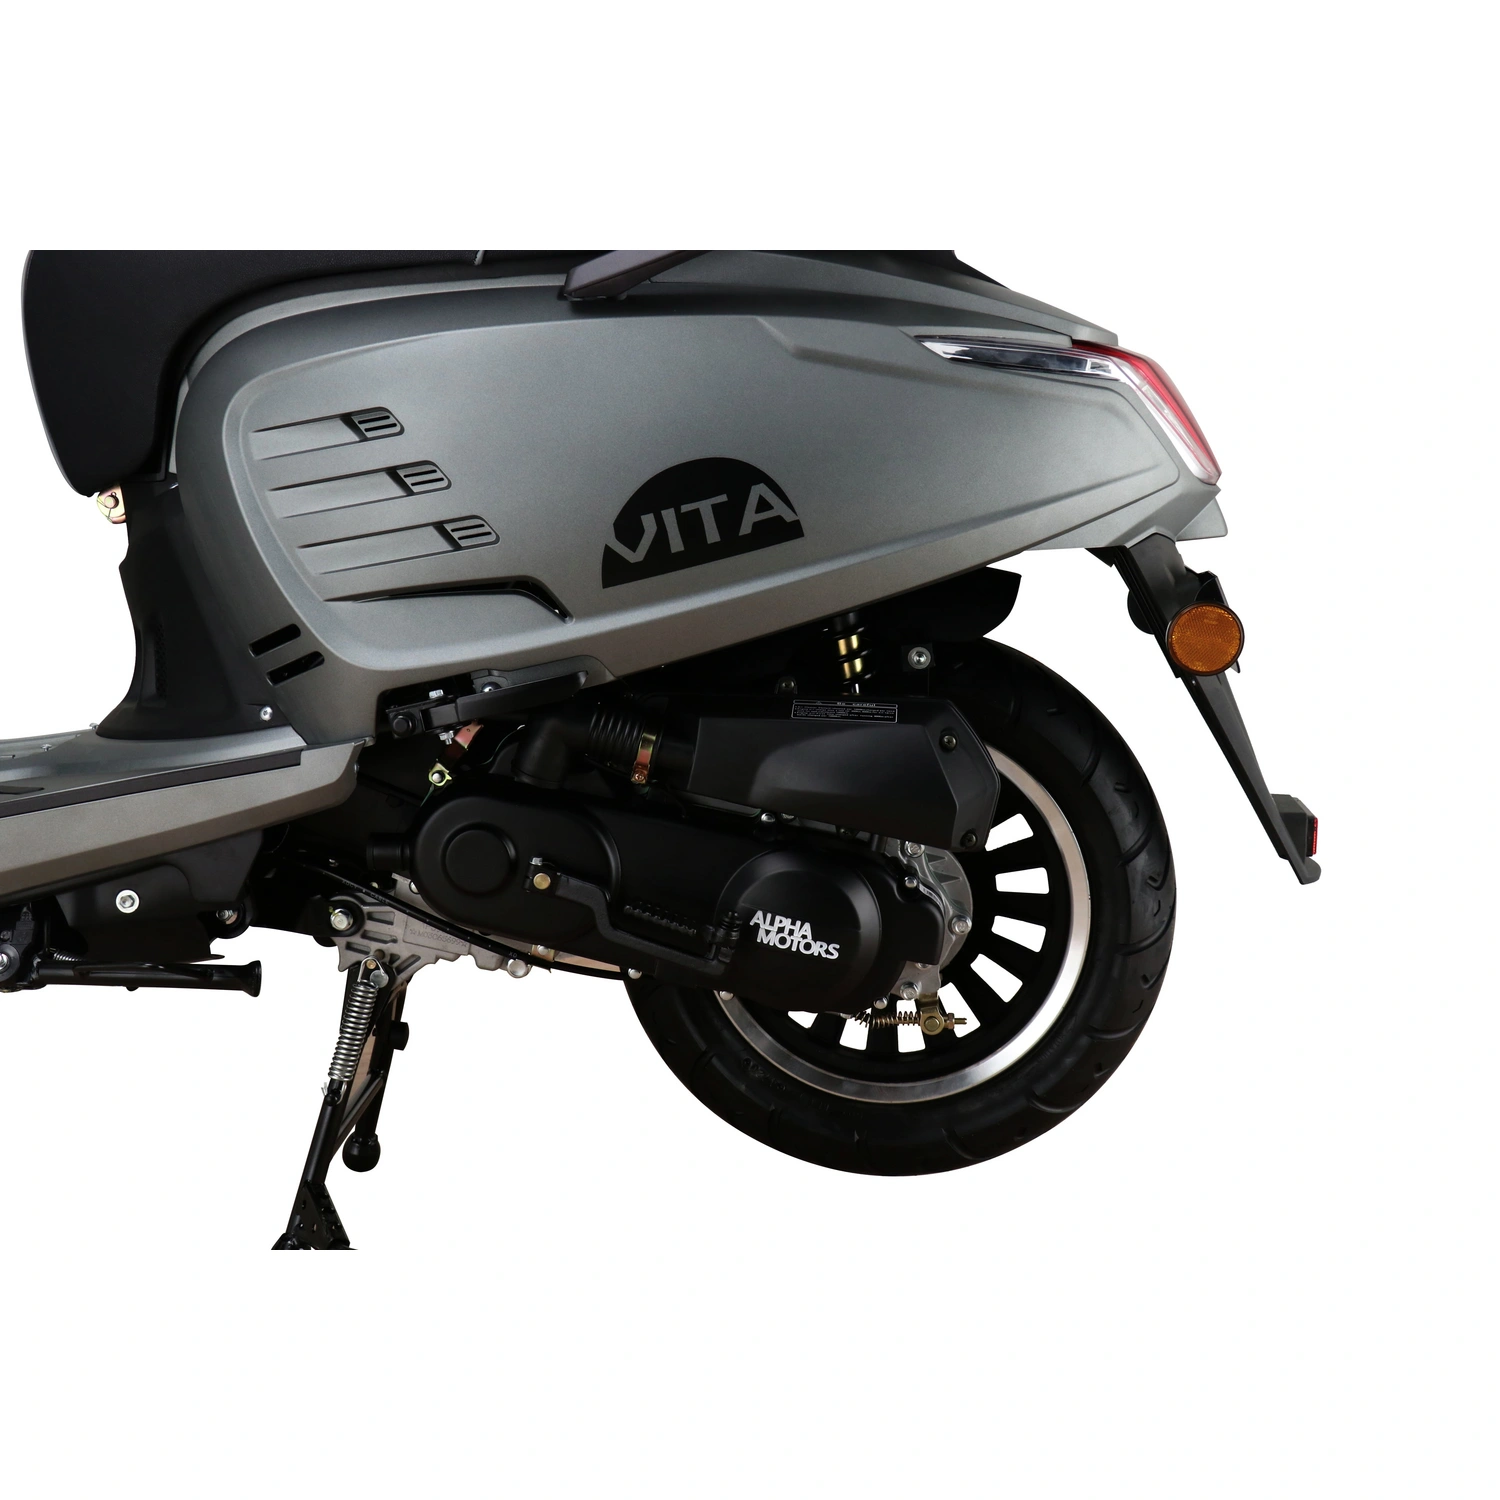 ALPHA MOTORS Motorroller »Vita«, Euro 5 50 cm³, 45km/h